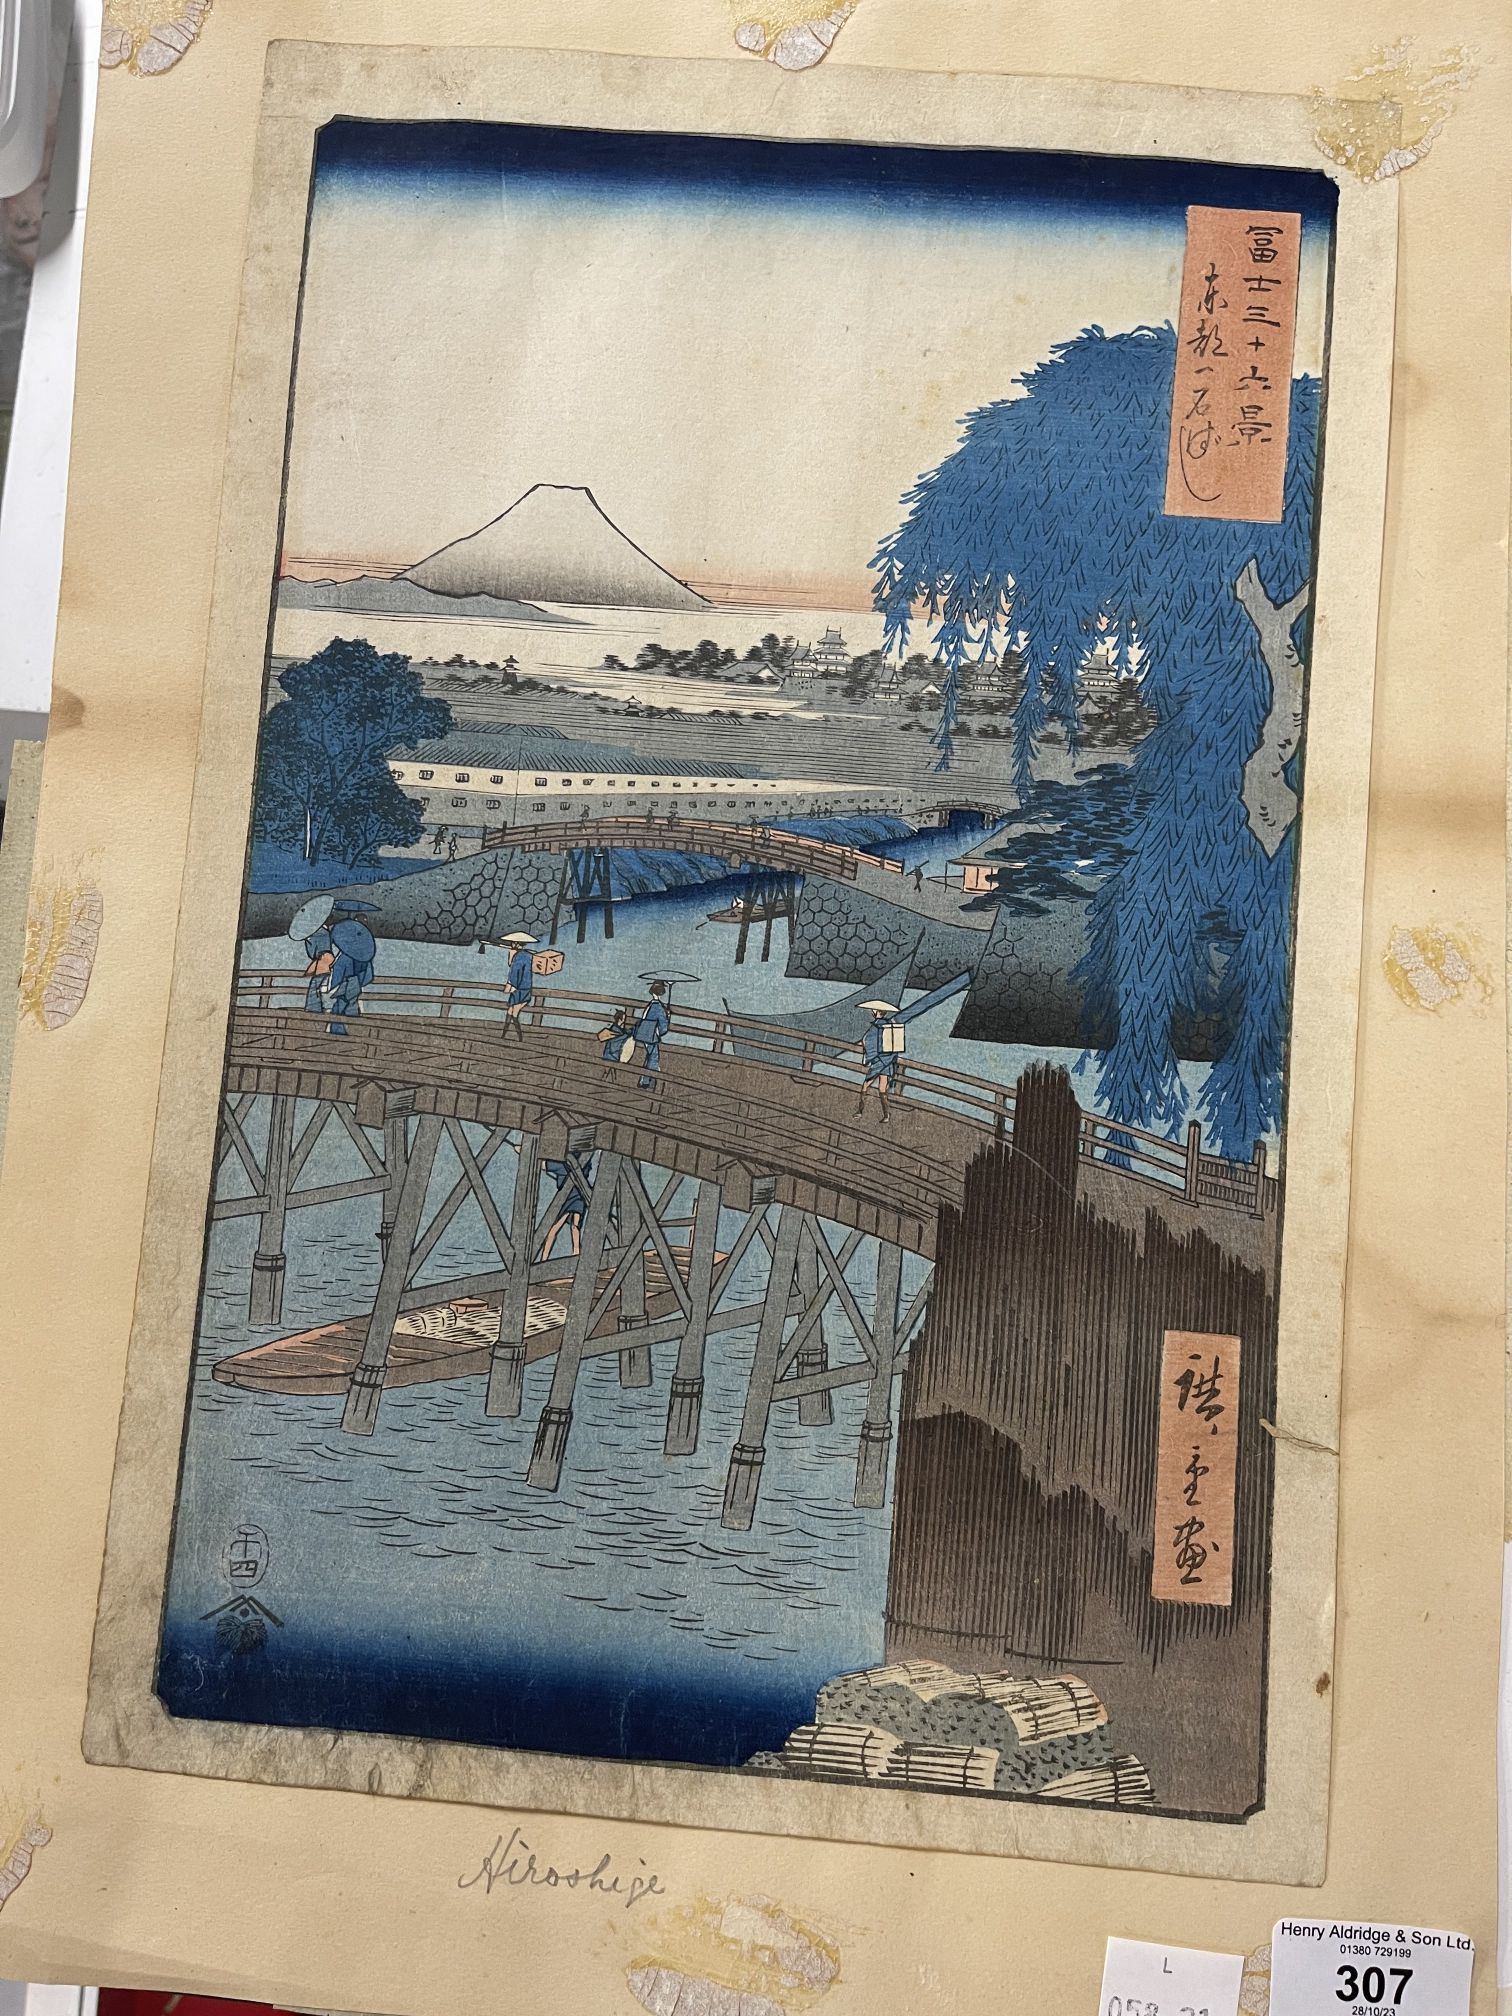 Utagowa Hiroshige, Ichikoku Bridge in the Eastern Capital, Mount Fuji in the distance. Some edge